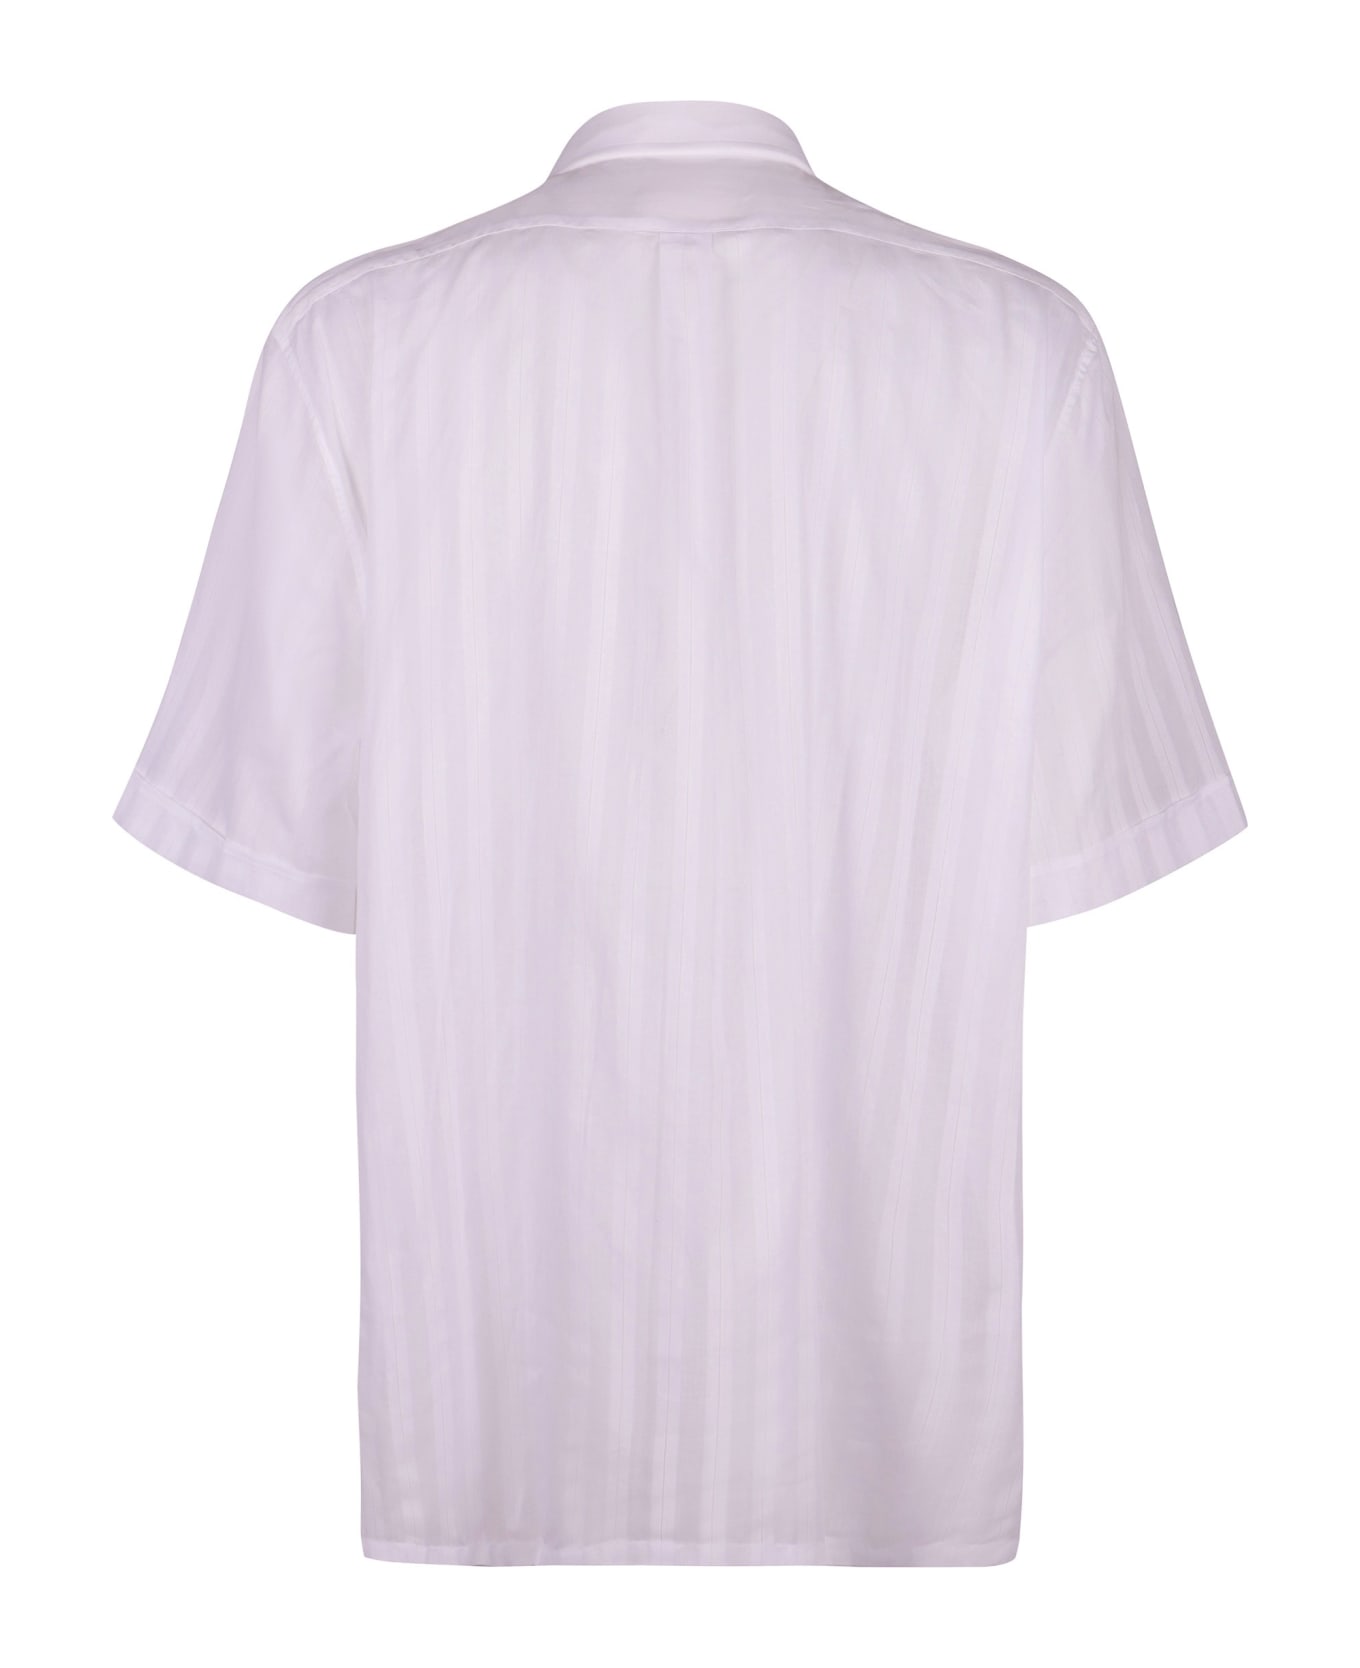 Givenchy Short Sleeve Cotton Shirt - White